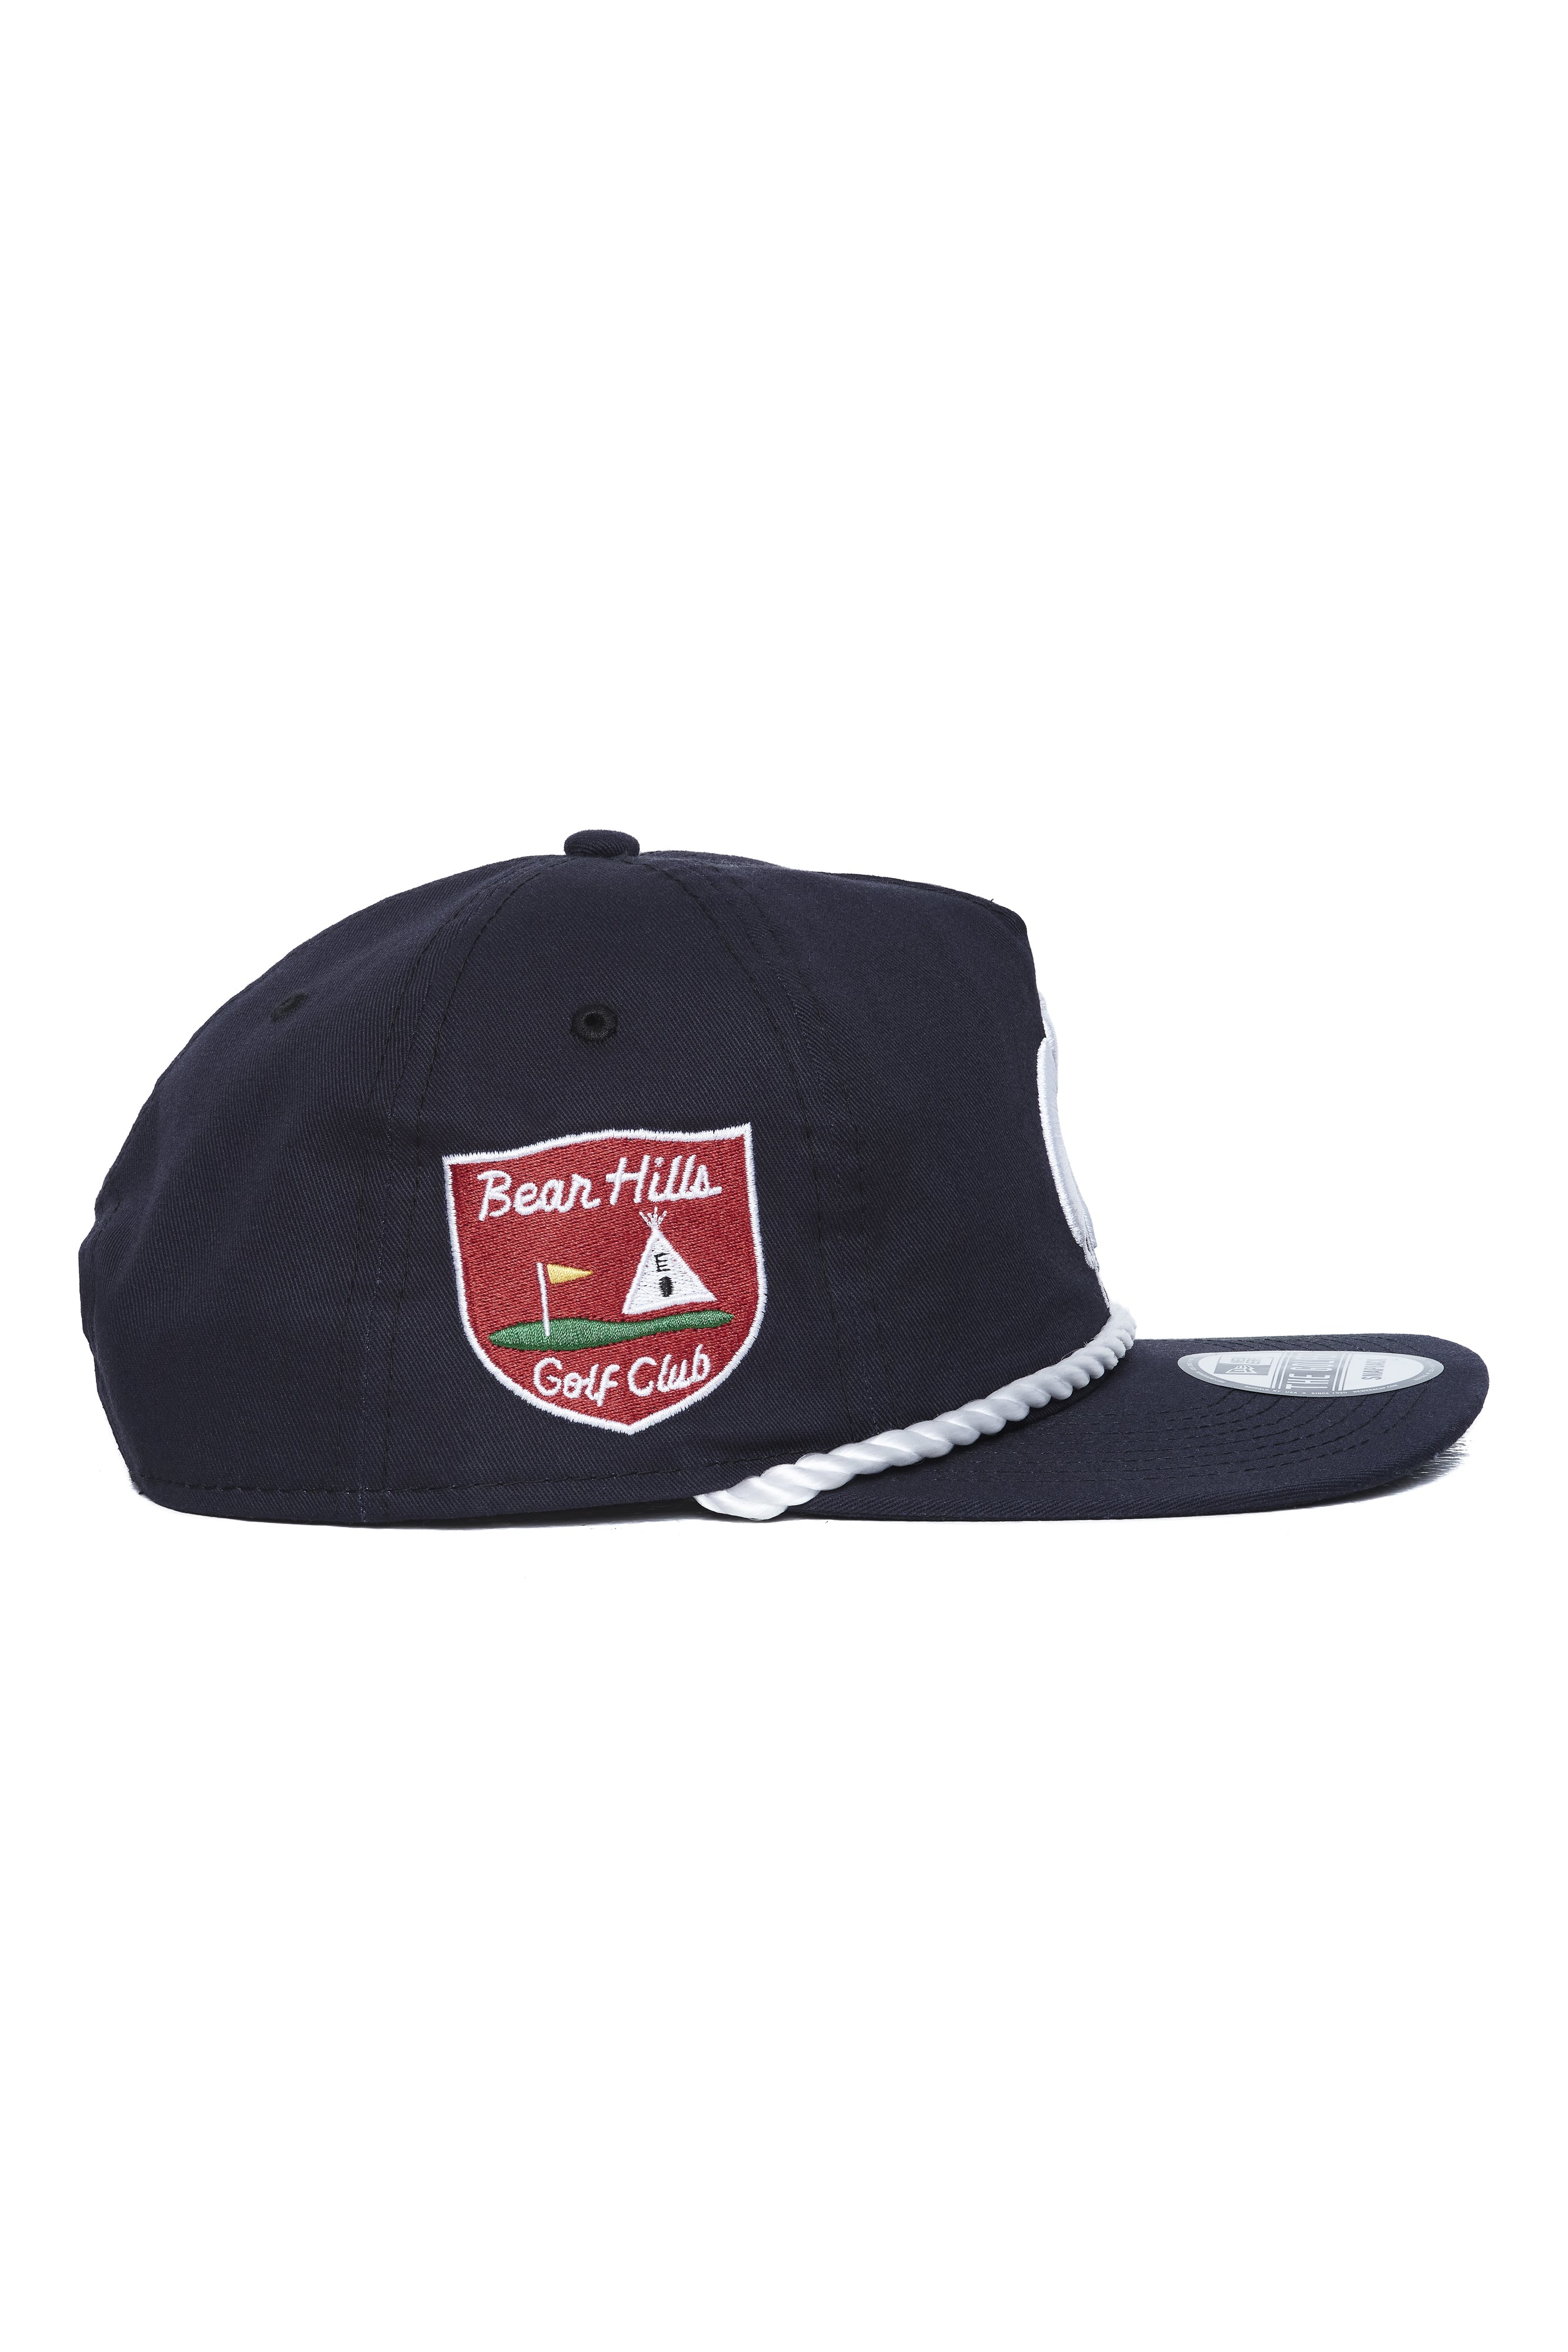 New Era BHGC Golfer Hat  - Navy